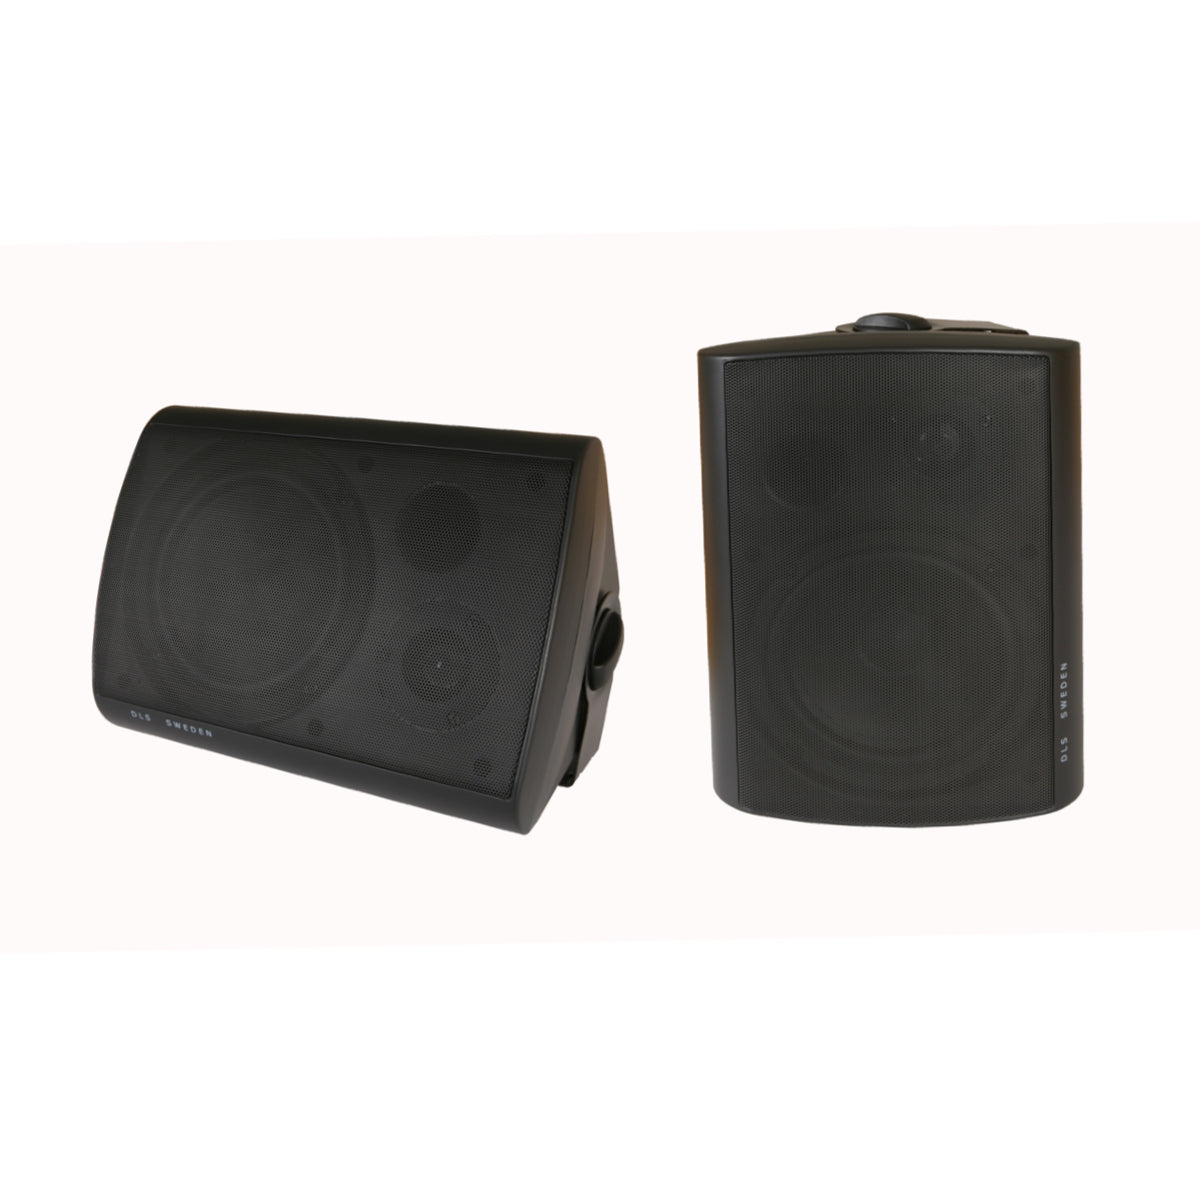 DLS MB6i - 2-way All Weather Speaker  - Pair, DLS, Outdoor Speaker - AVStore.in